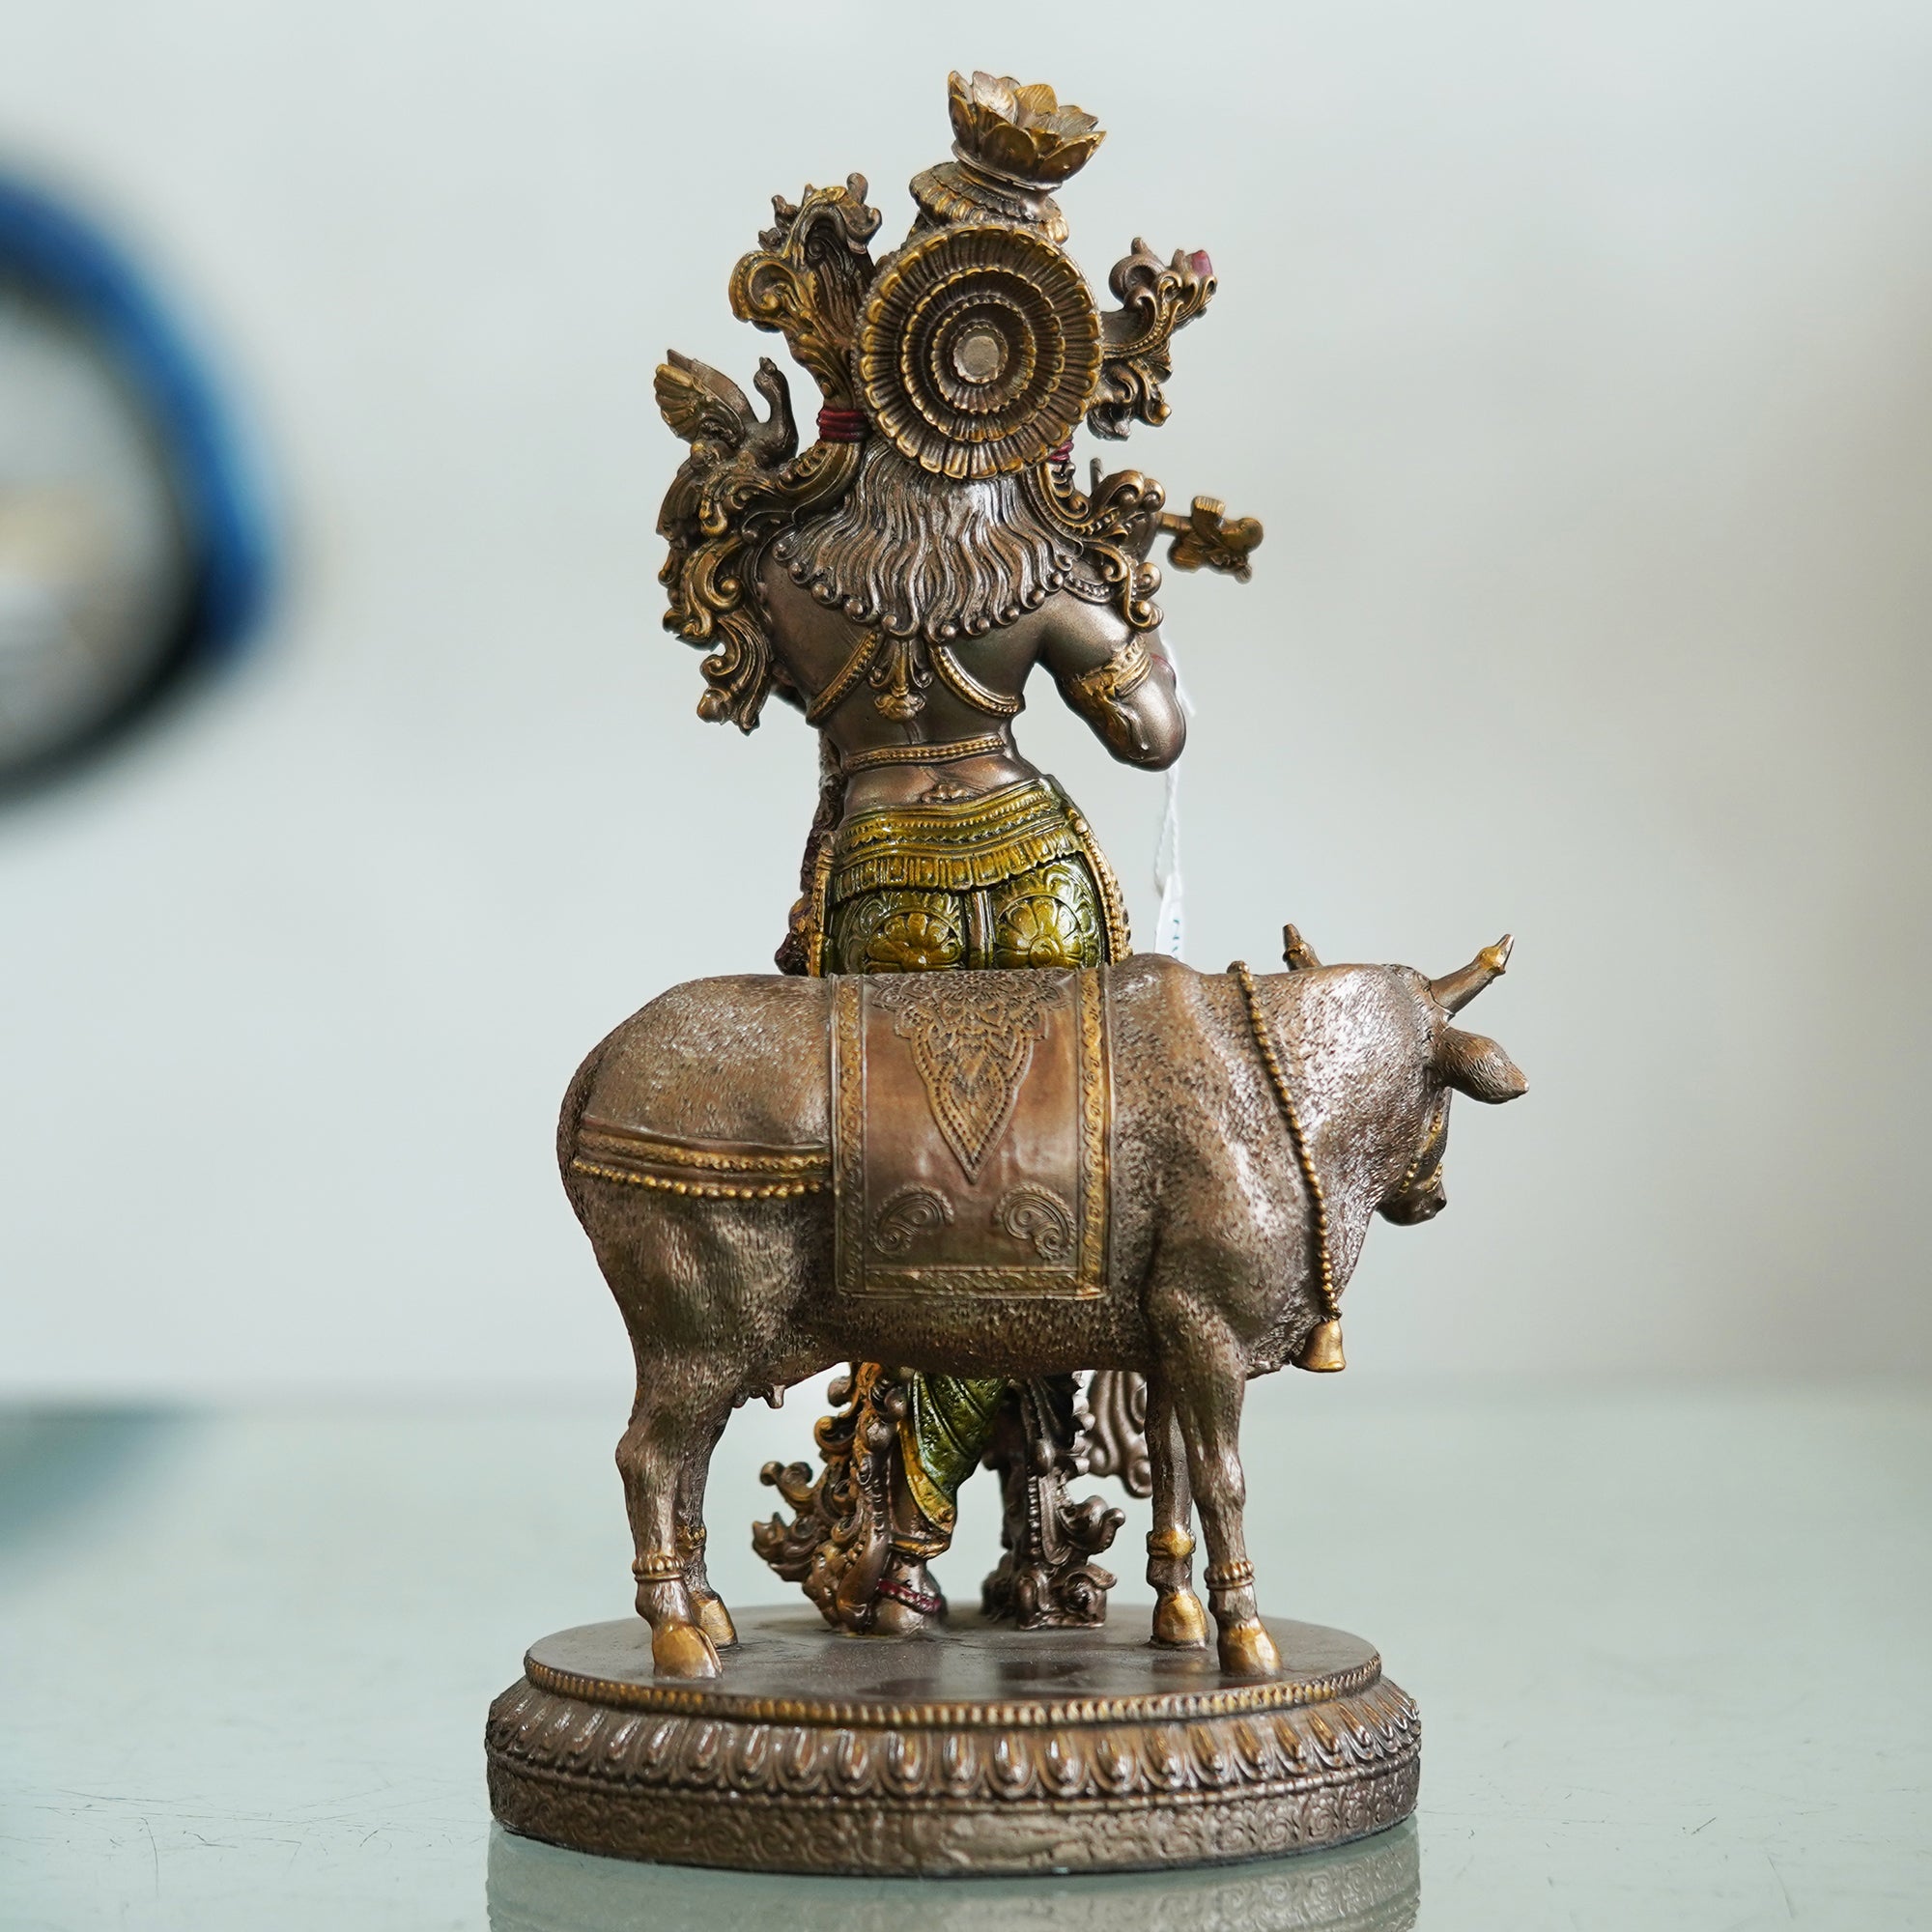 Deveie Crafts Resin Krishna and Cow Statue Spiritual Home Décor